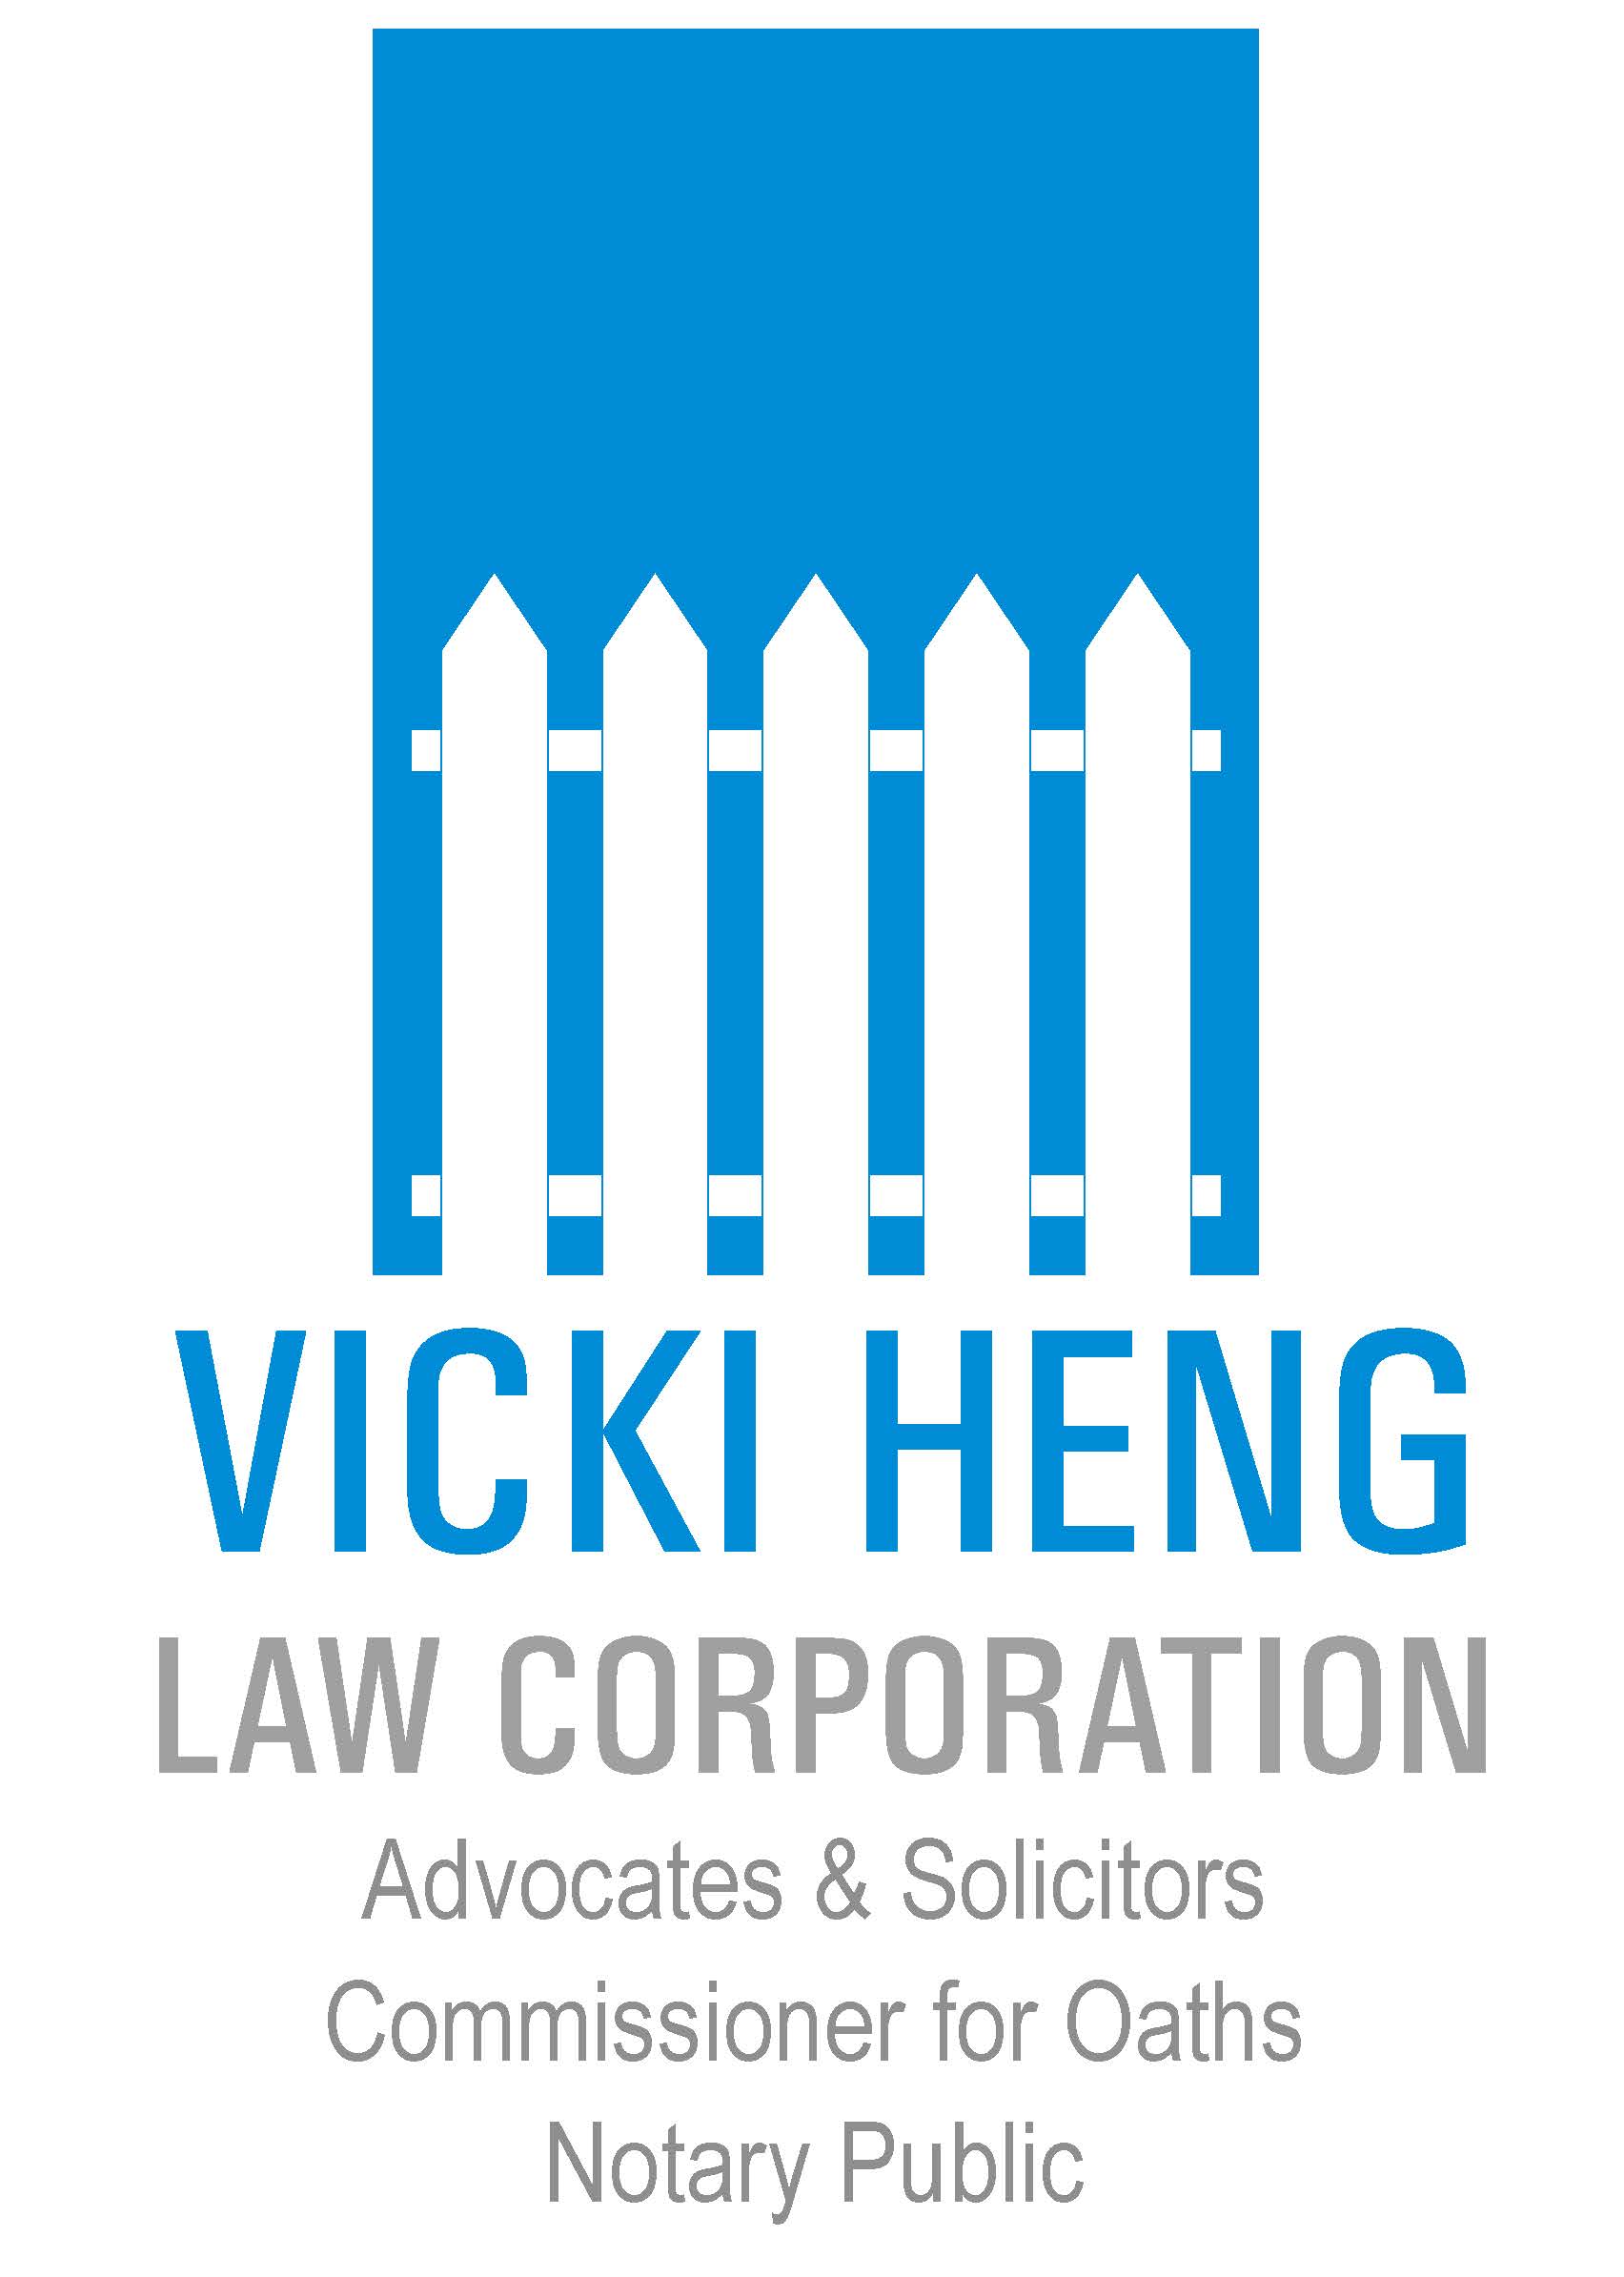 Vicki Heng Law Corporation